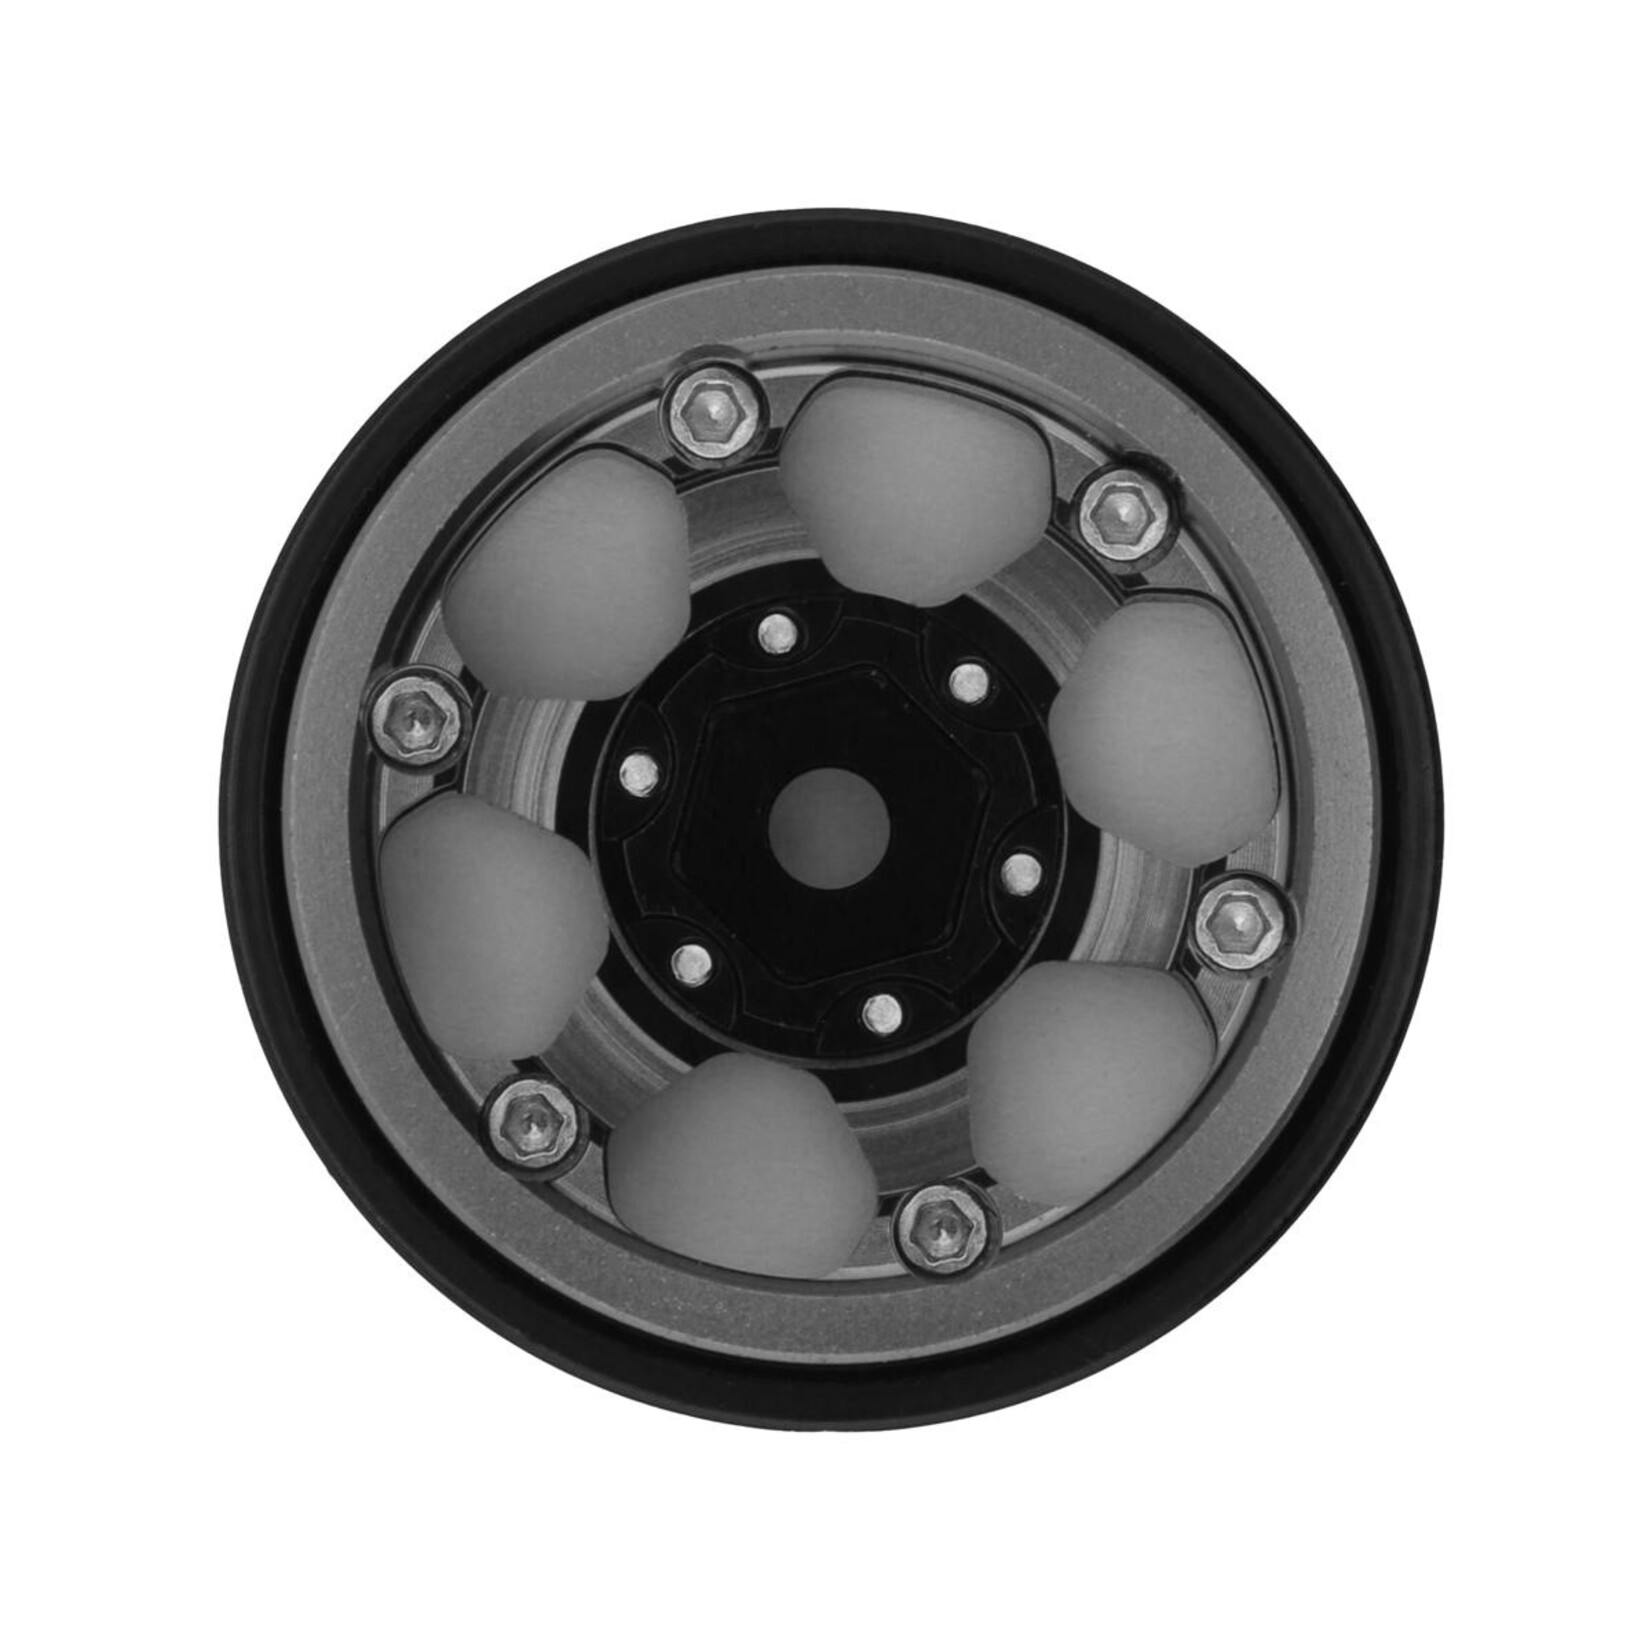 Treal Treal Hobby Type D 1.0" Concave 6-Spoke Beadlock Wheels (Grey) (4) (21.2g) #X00396C7T5